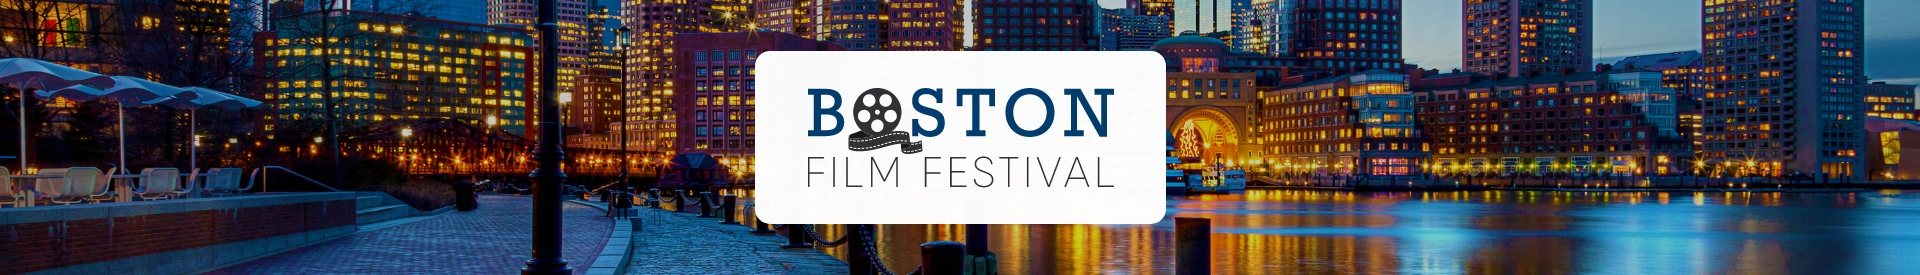 Boston Film Festival 2021